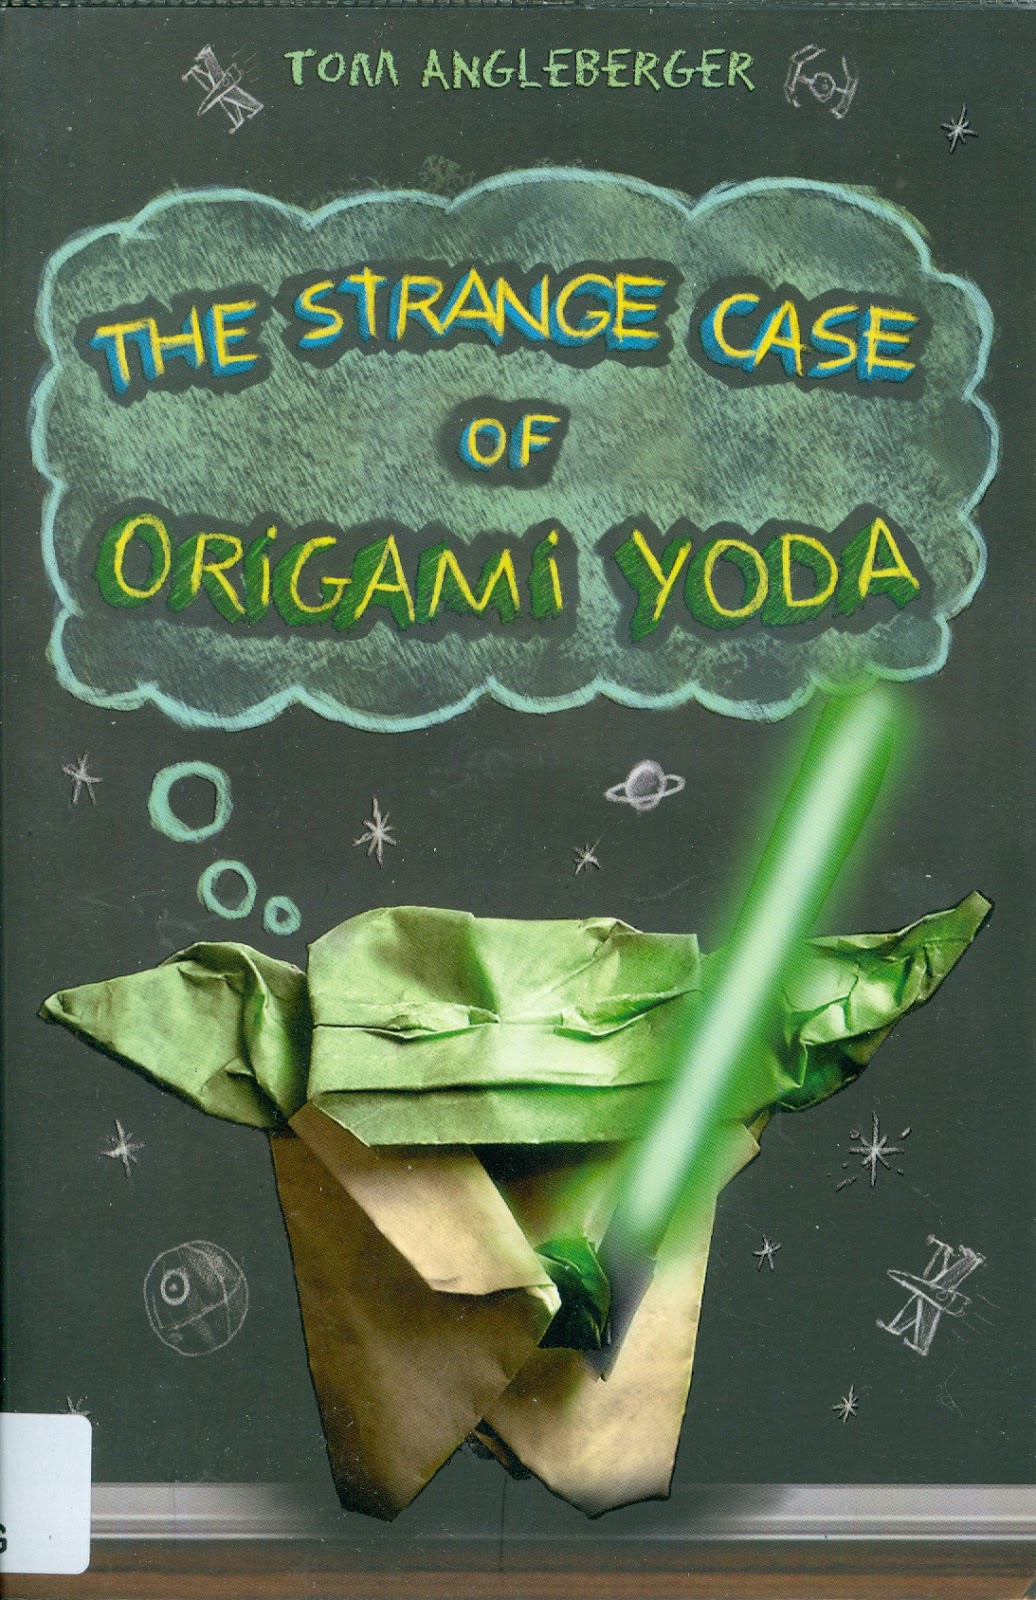 Hutchesons' Grammar School Primary Library The Strange Case of Origami Yoda